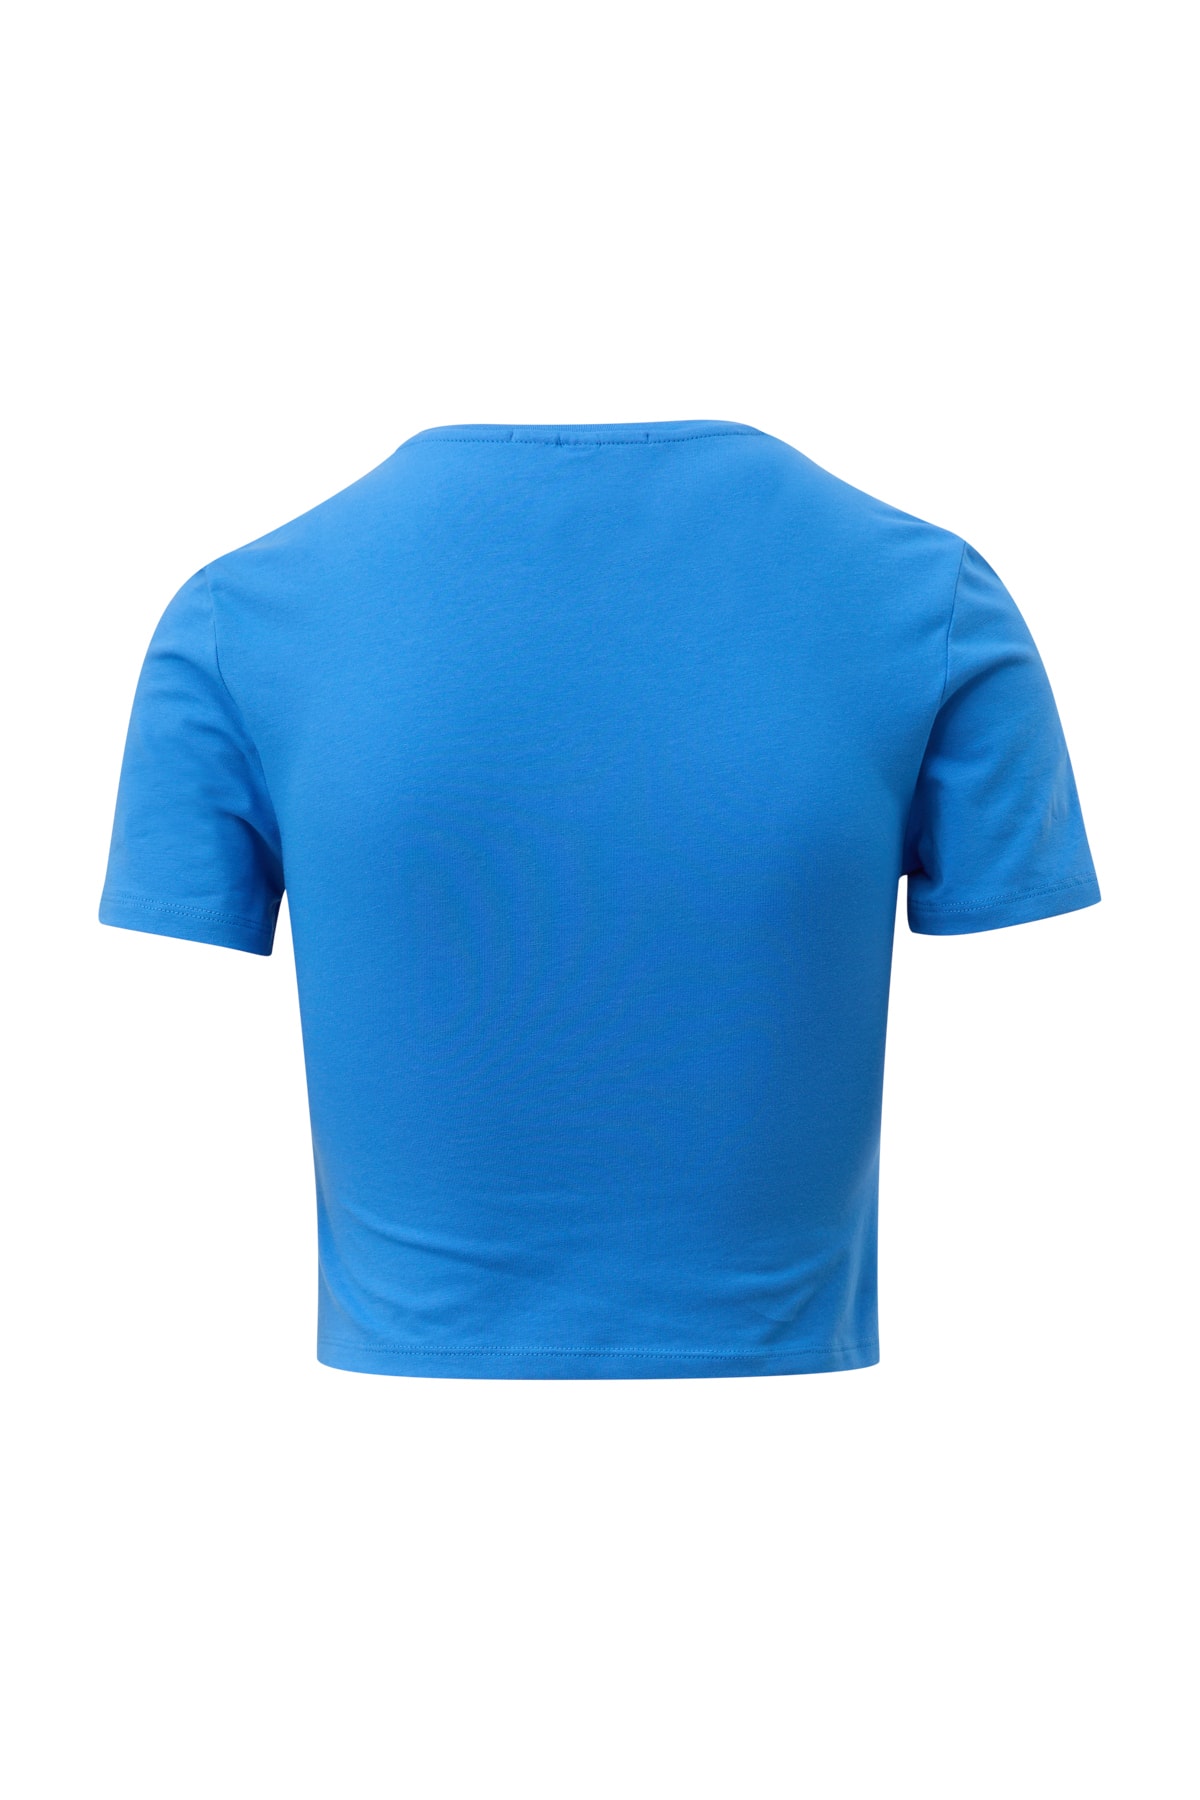 QS by s.Oliver T-Shirt Blau Regular Fit